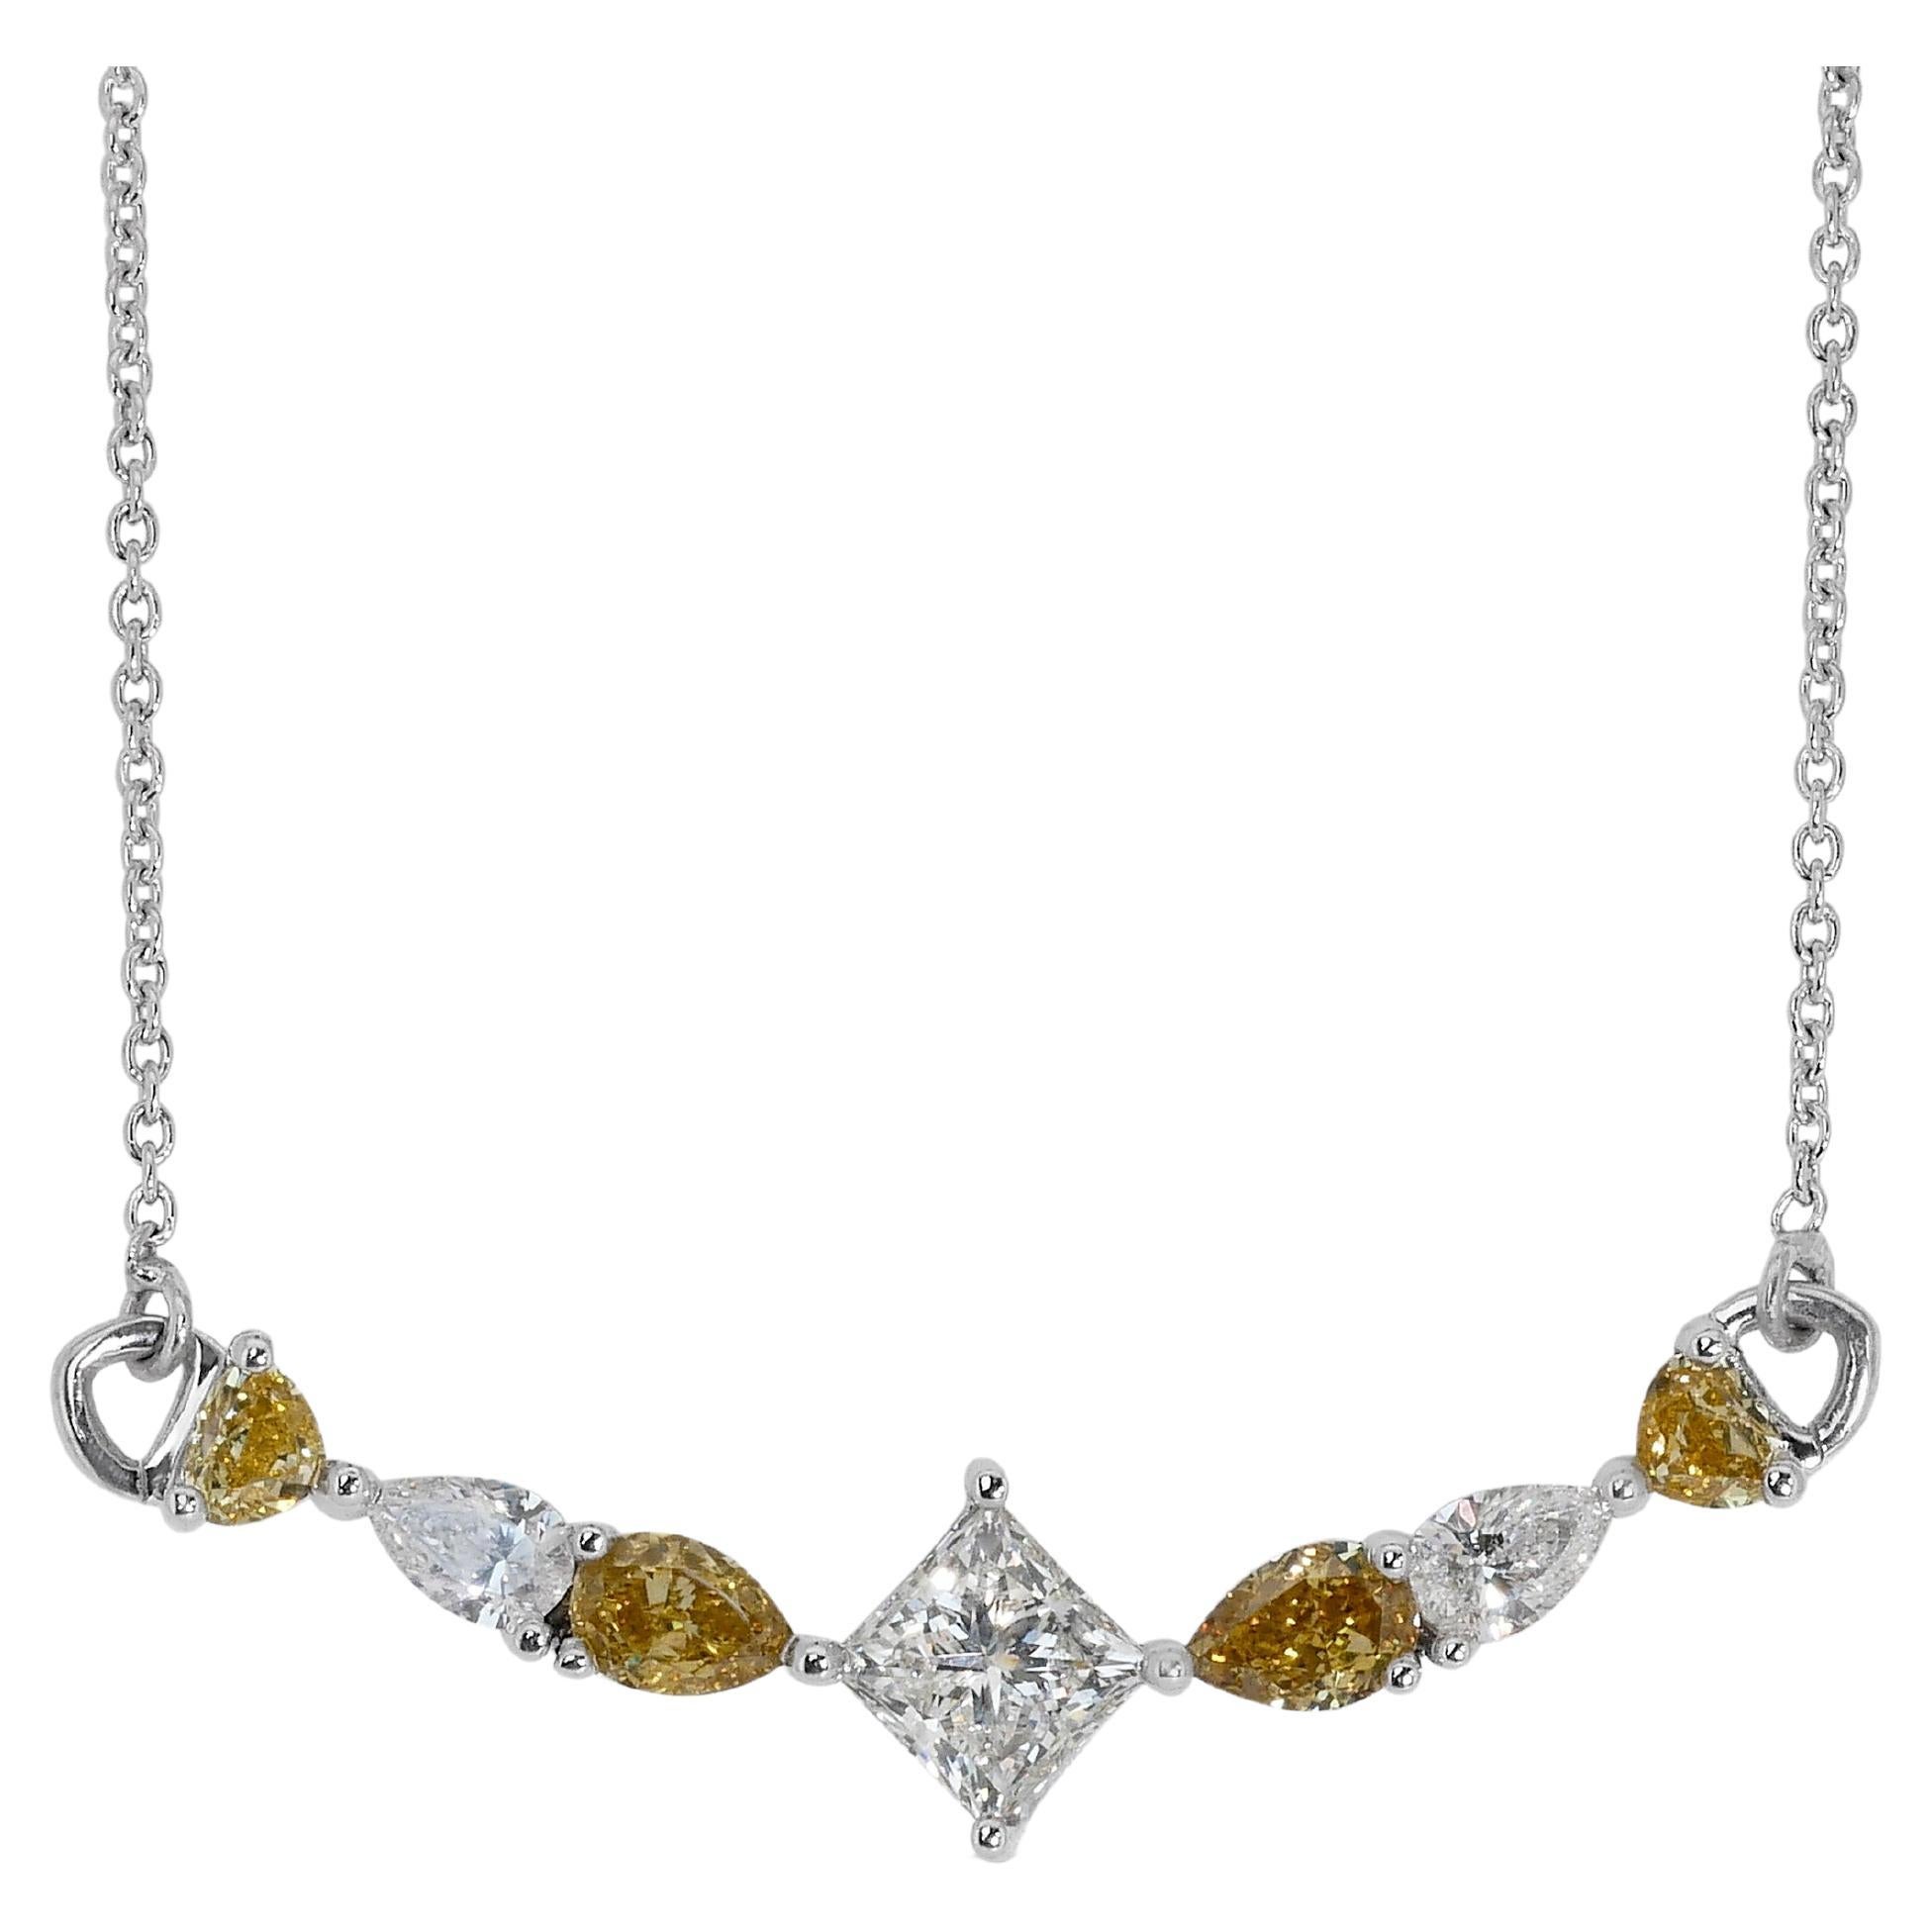 Marvelous 18k White Gold Necklace w/ 1.9 Carat Natural Diamonds IGI Certificate For Sale